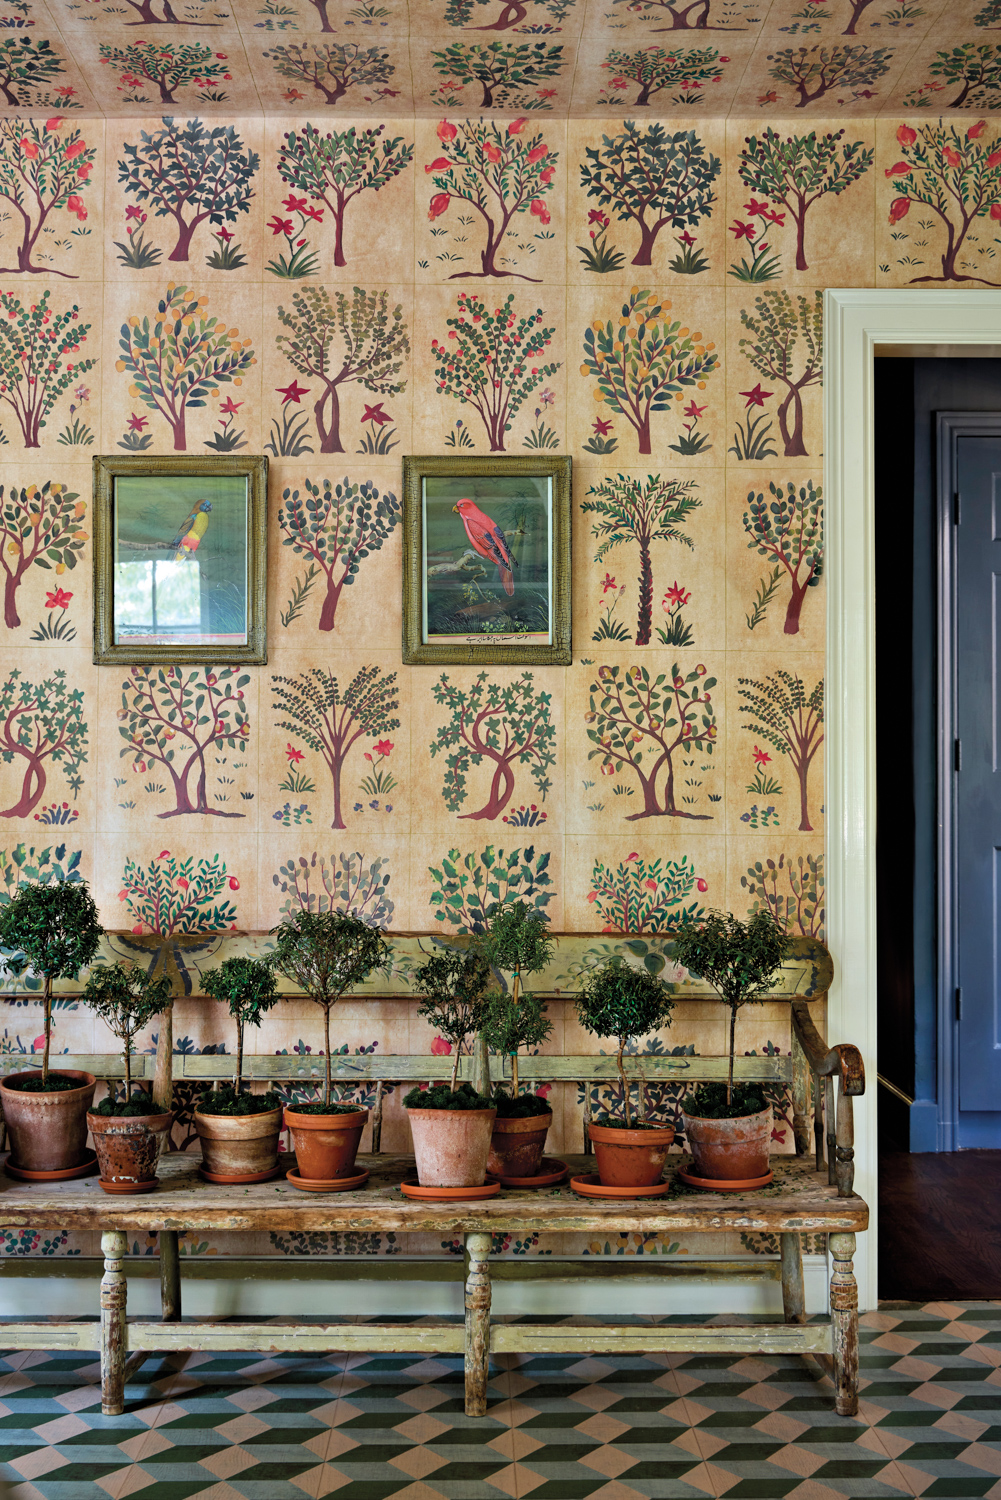 Kips Bay room with botanical wallpaper, framed birds, and geometric floors